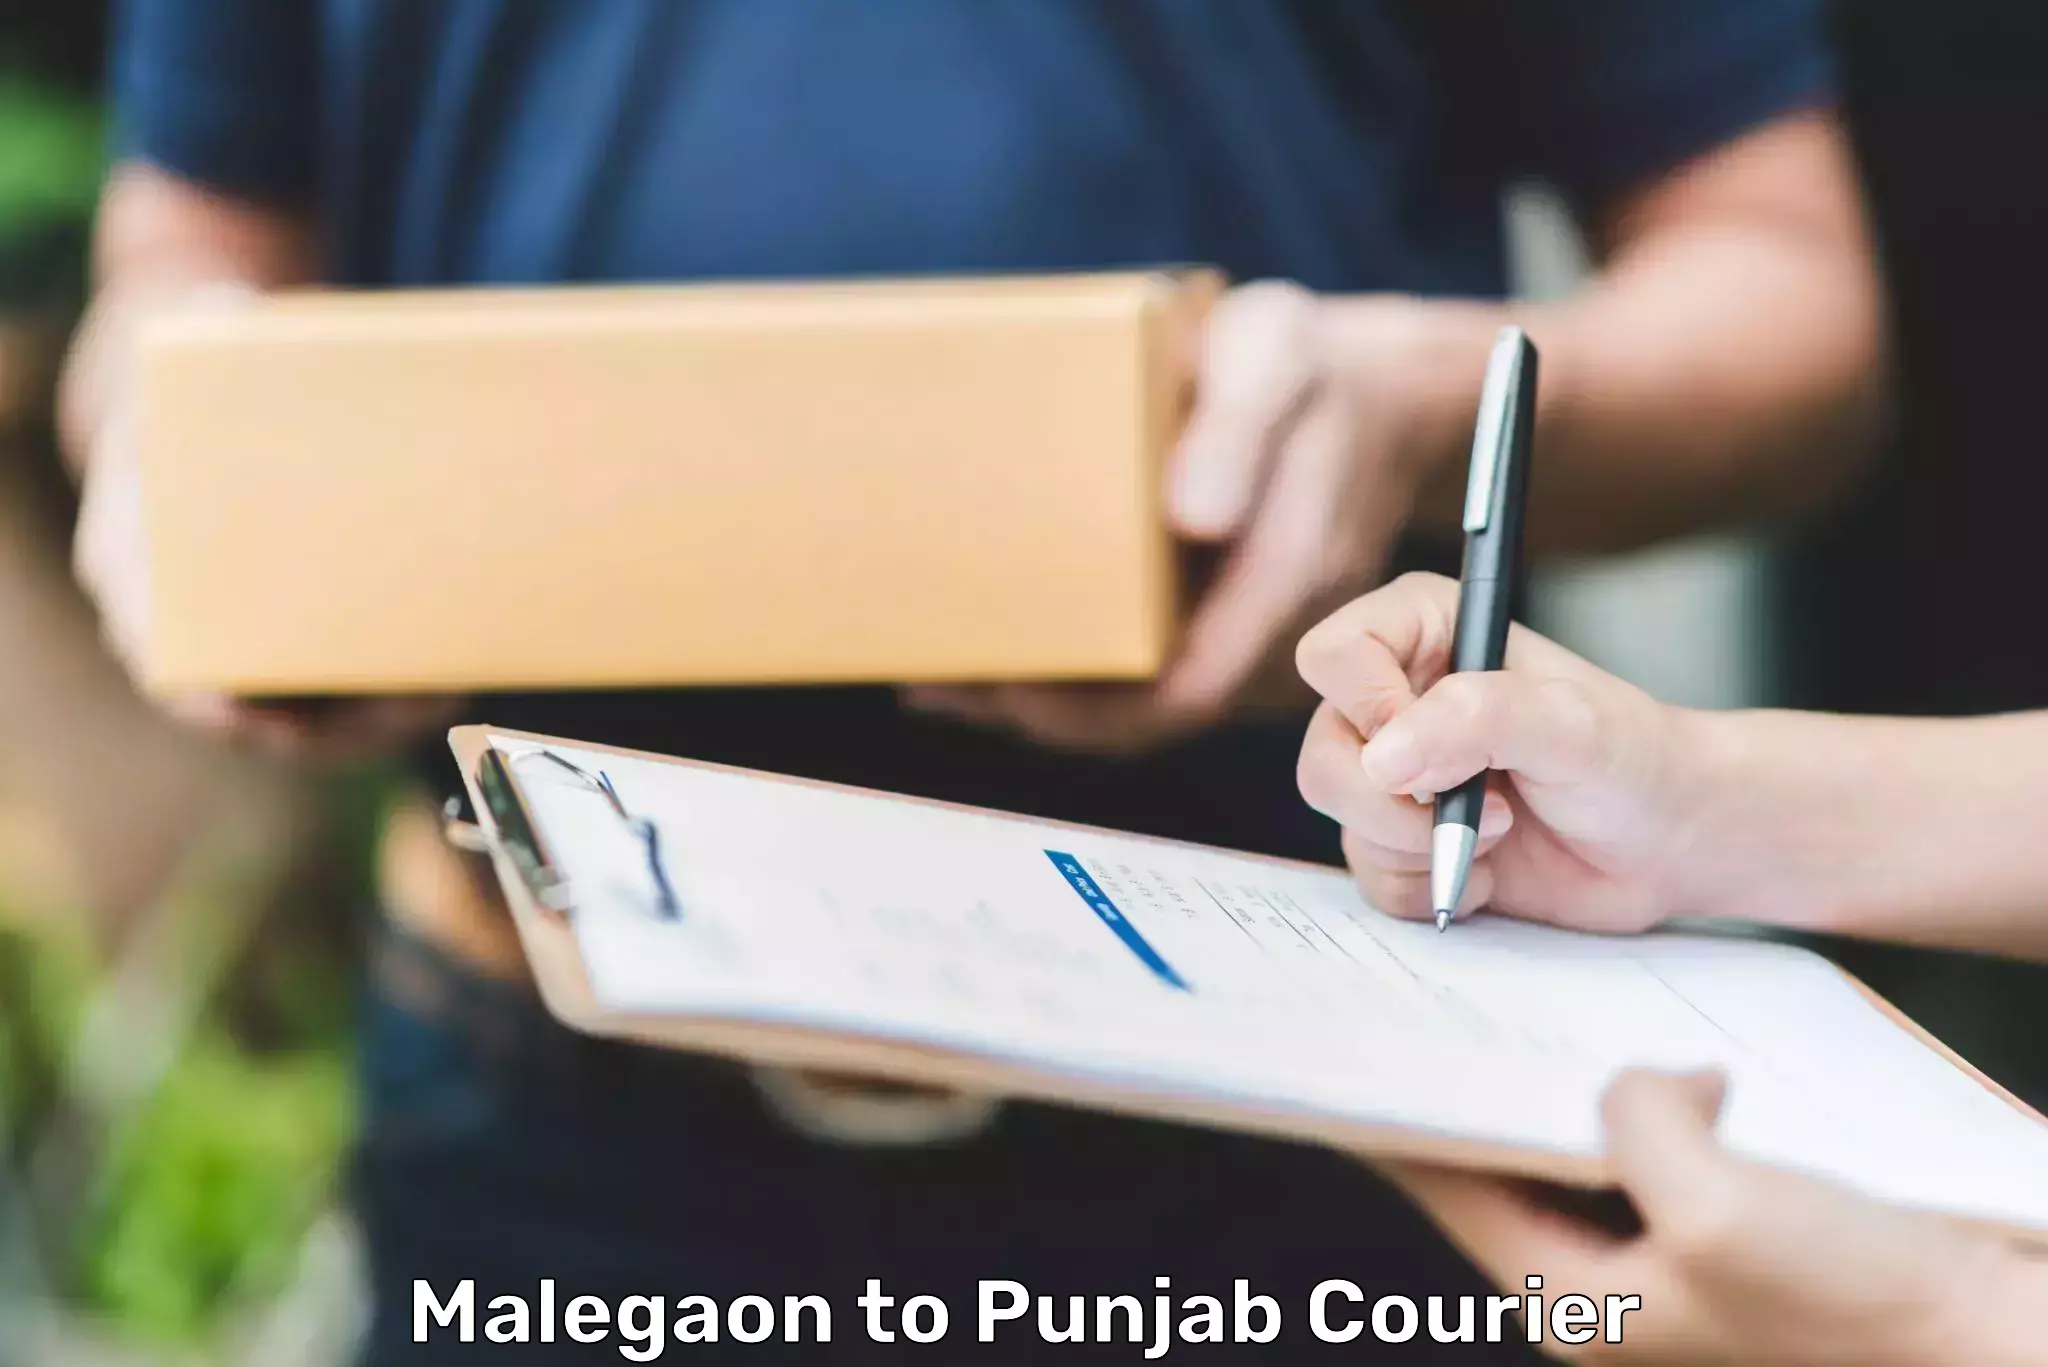 Digital courier platforms Malegaon to Ludhiana